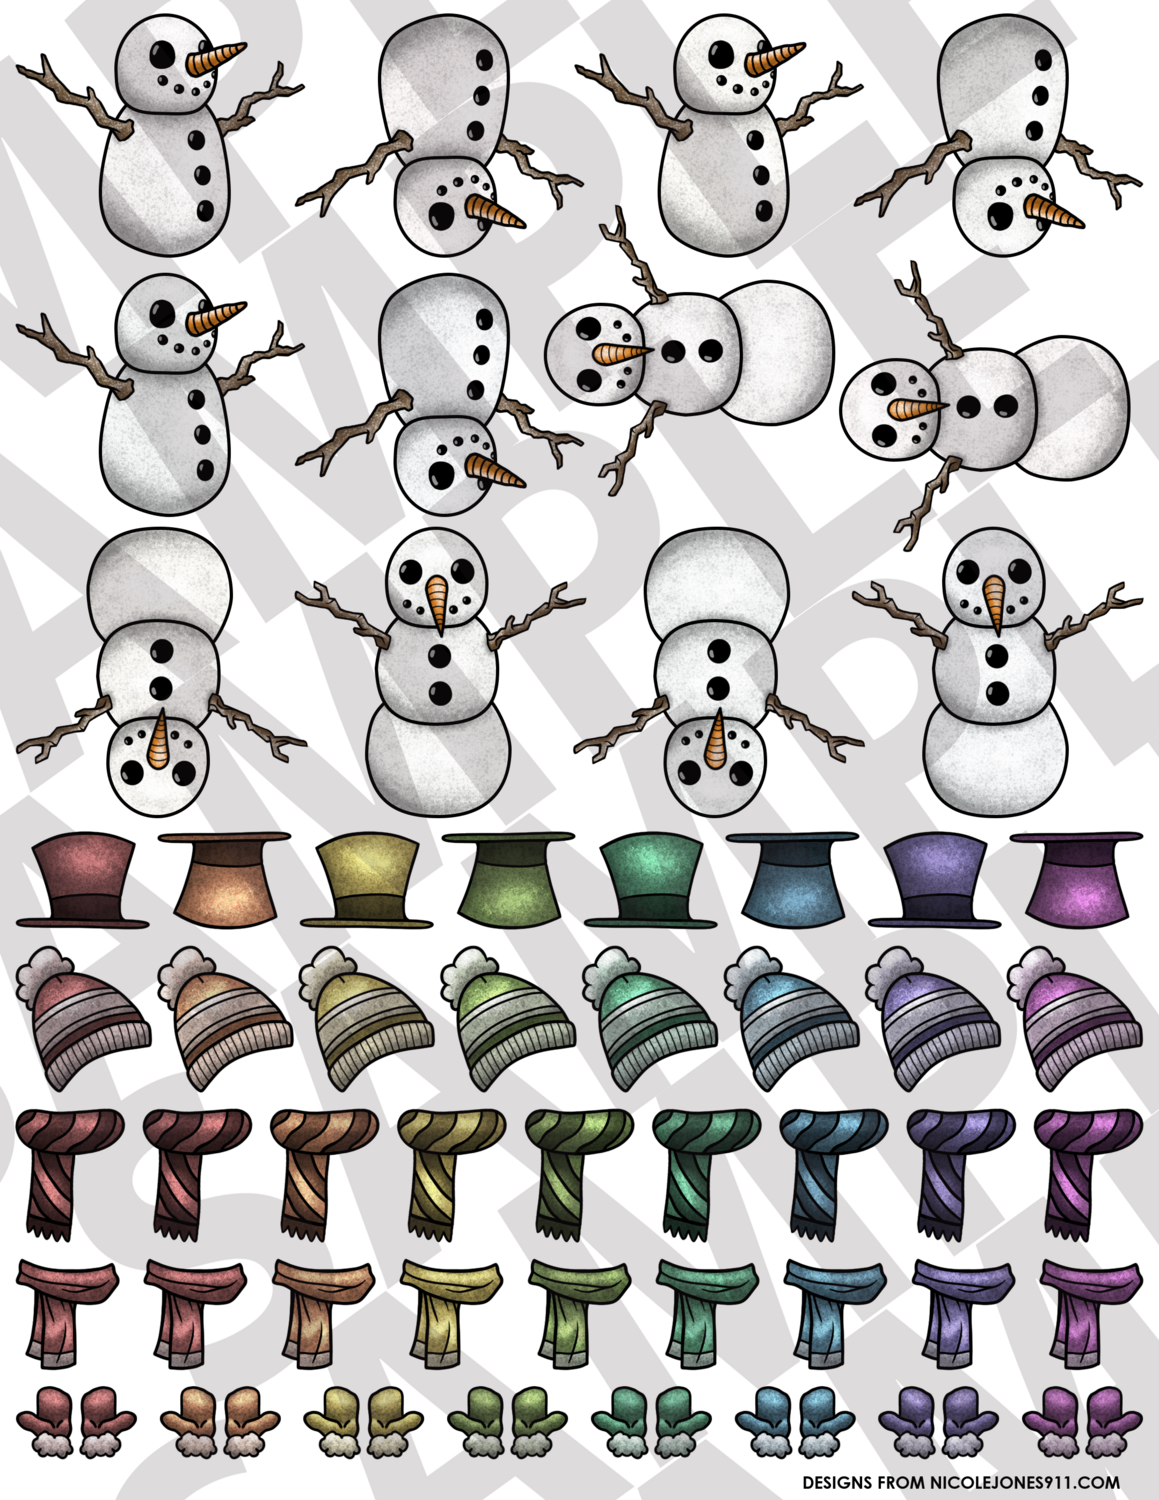 Season Spices - Build-a-Snowman